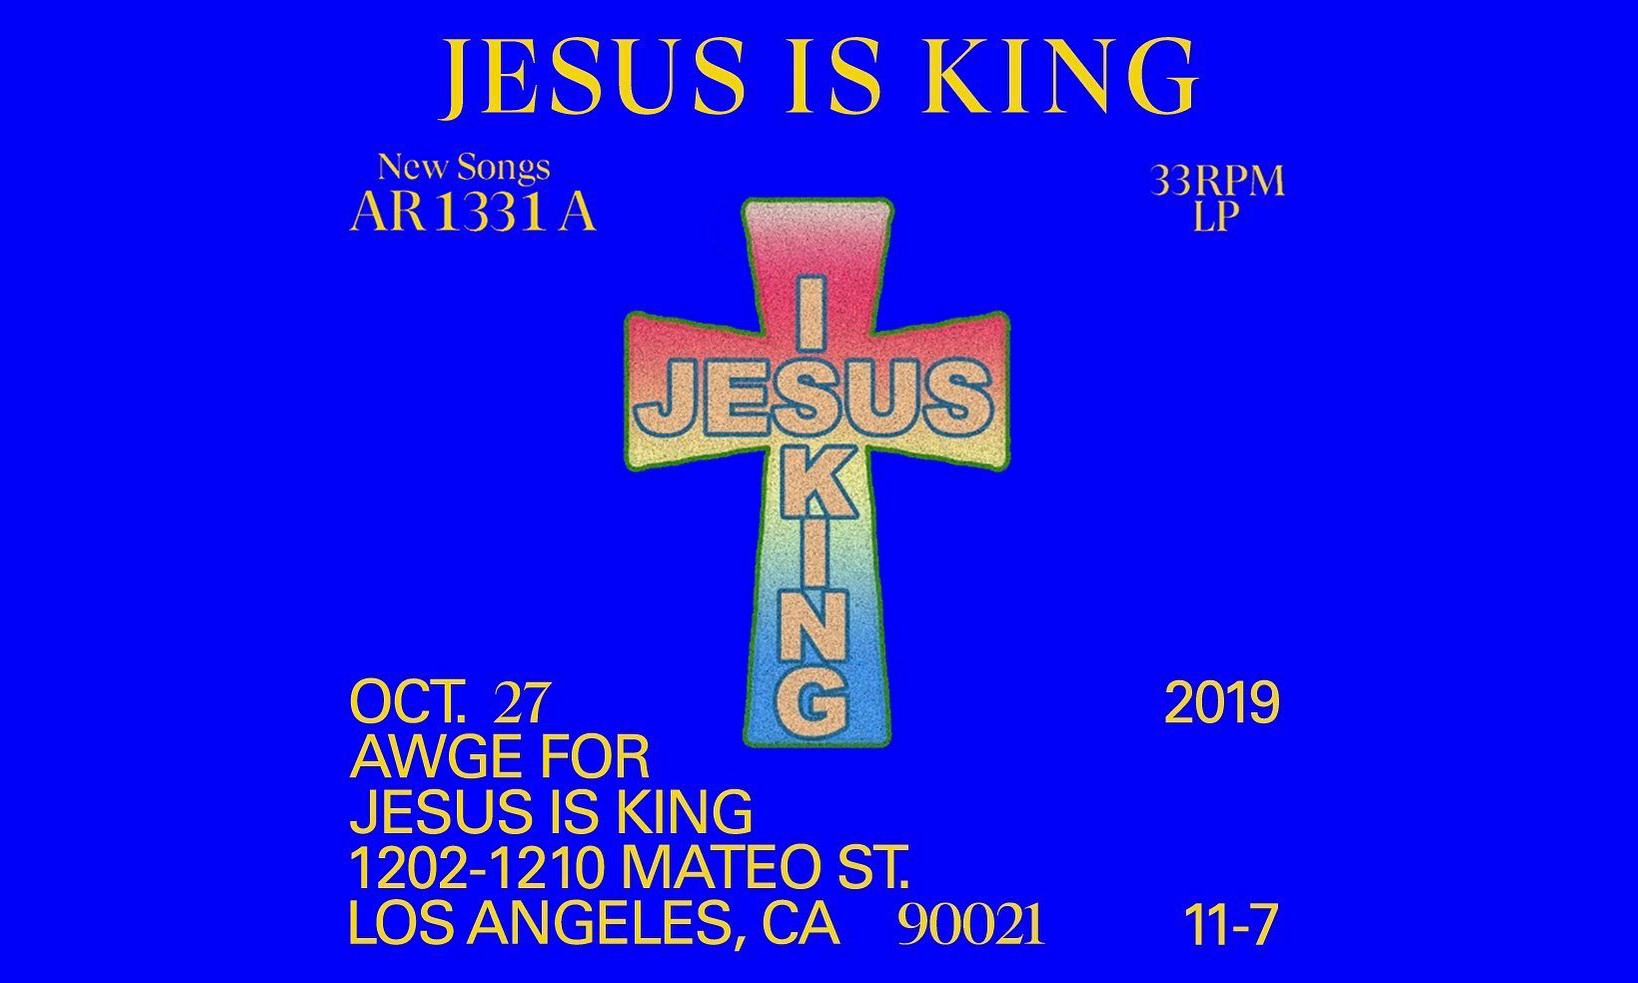 AWGE 为 Kanye West 新专辑《Jesus Is King》打造别注系列单品